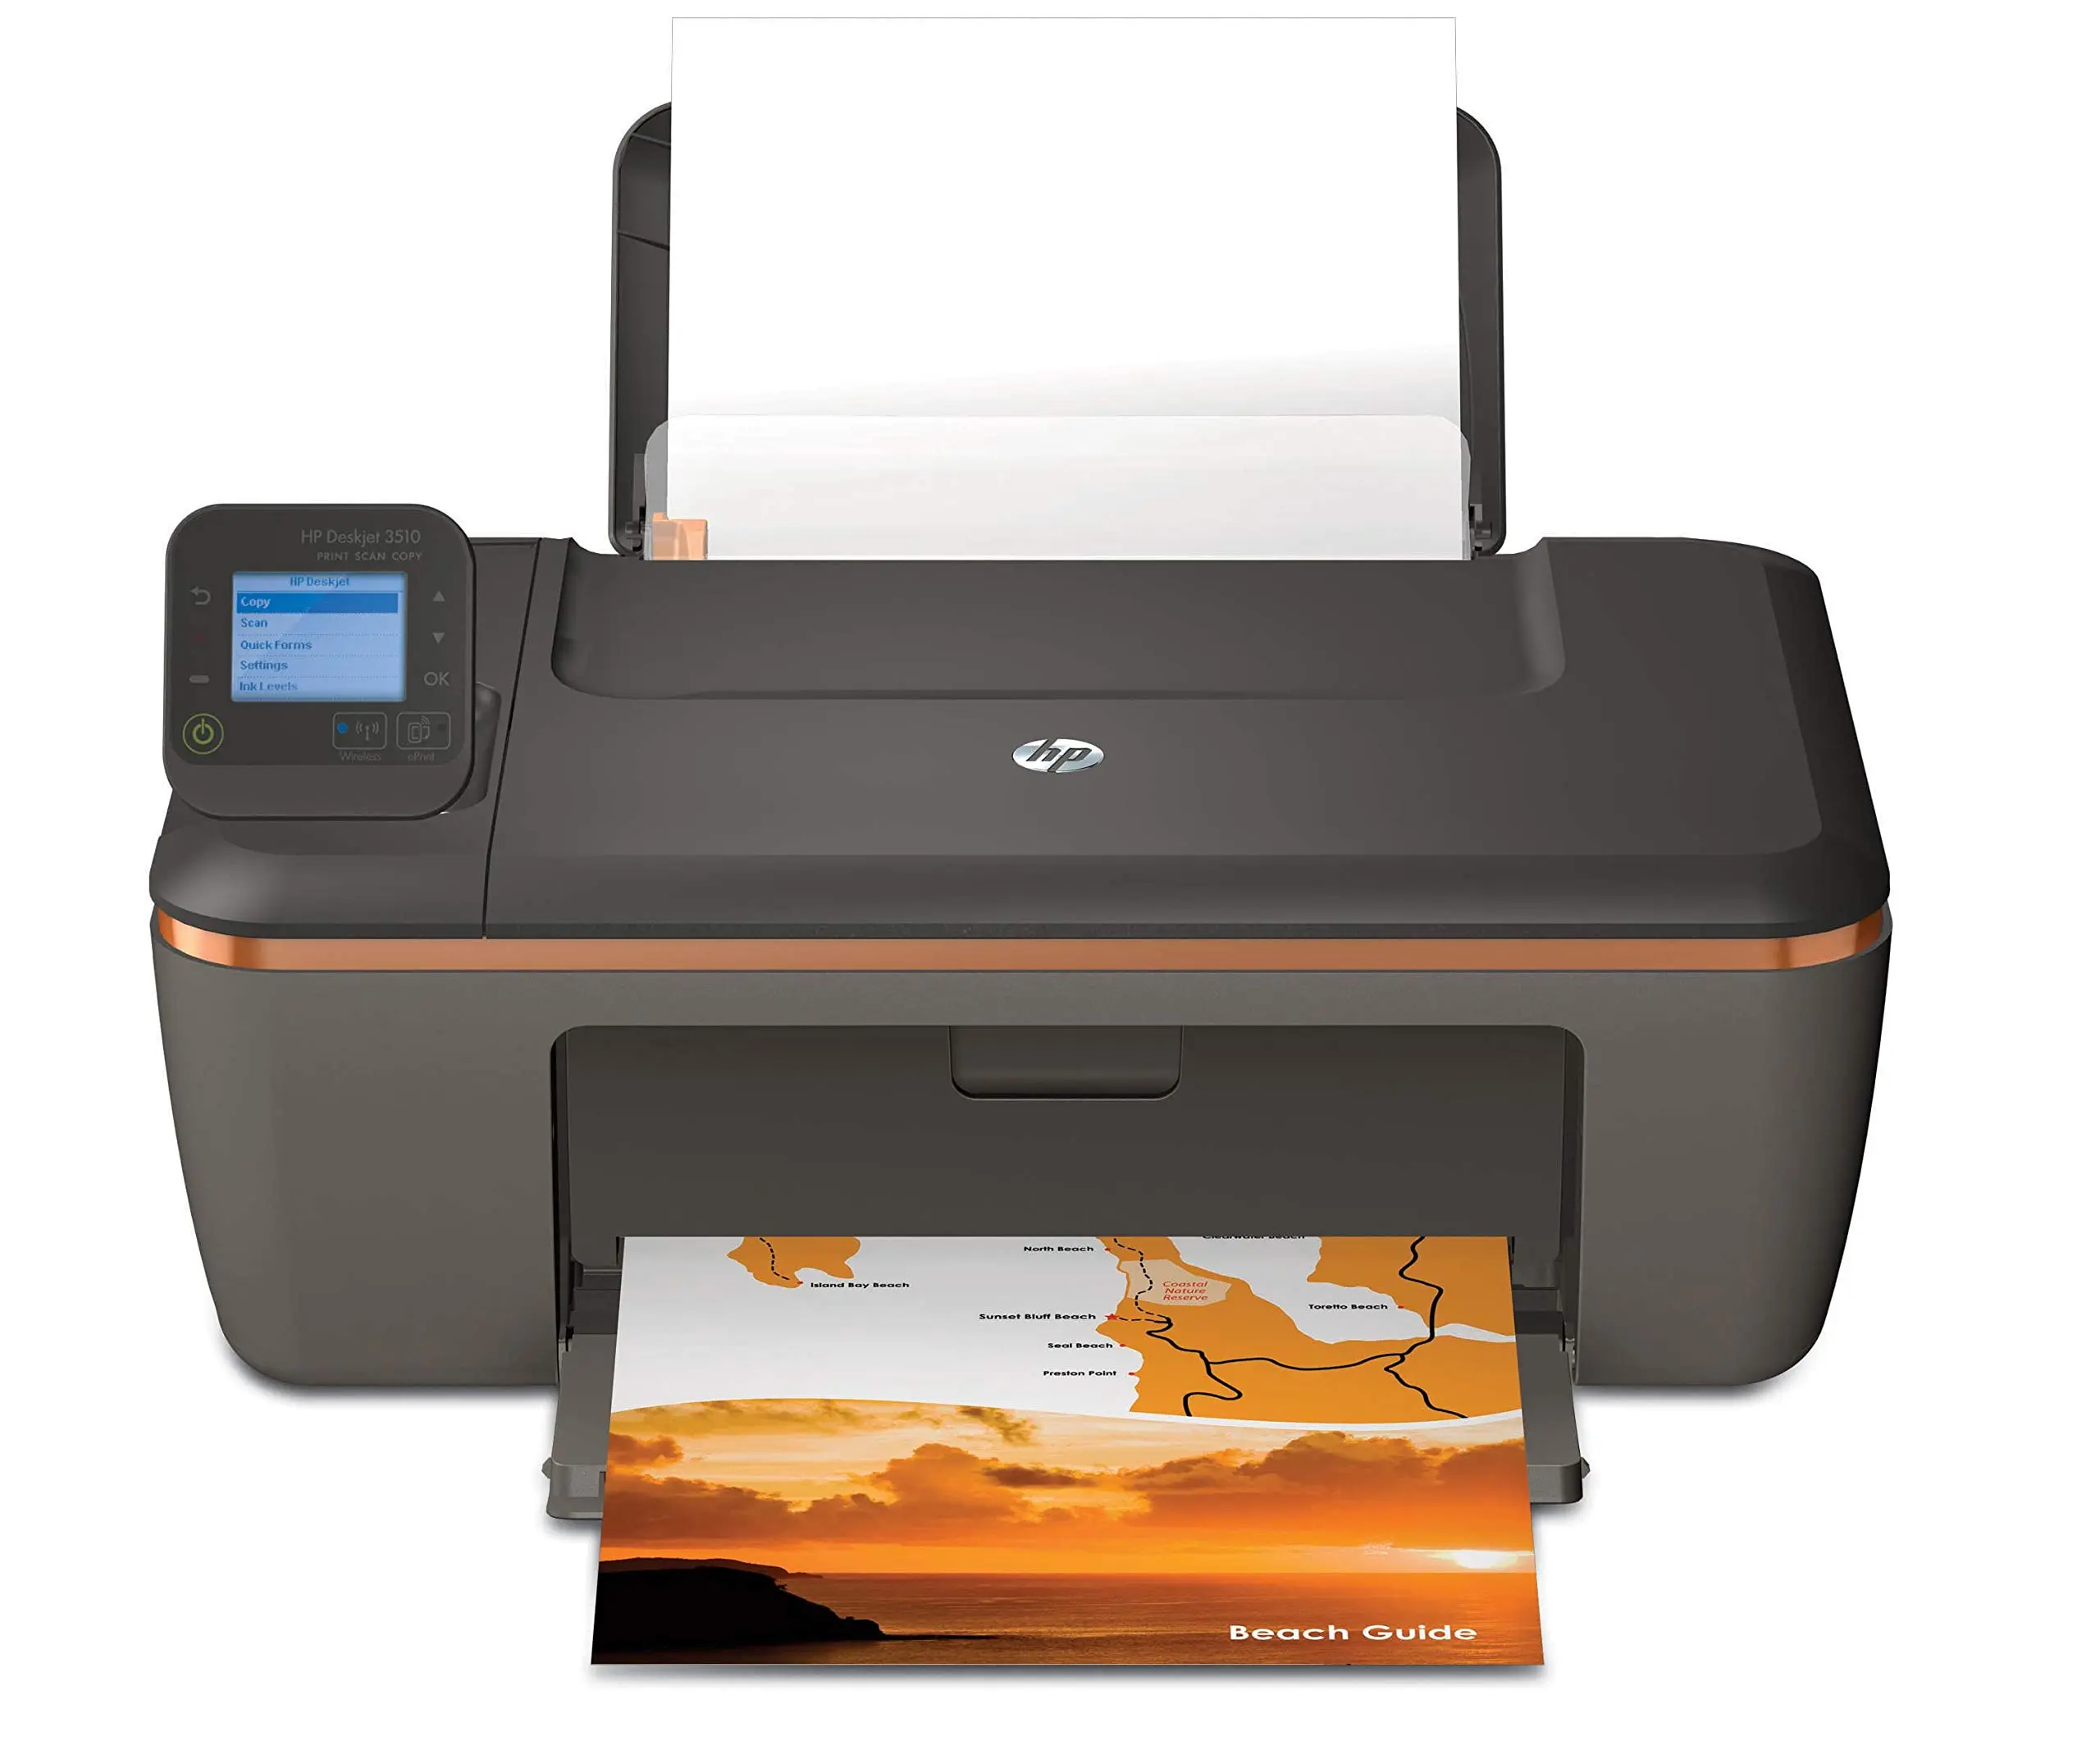 hewlett packard 3510 used - Why did my HP printer stop working